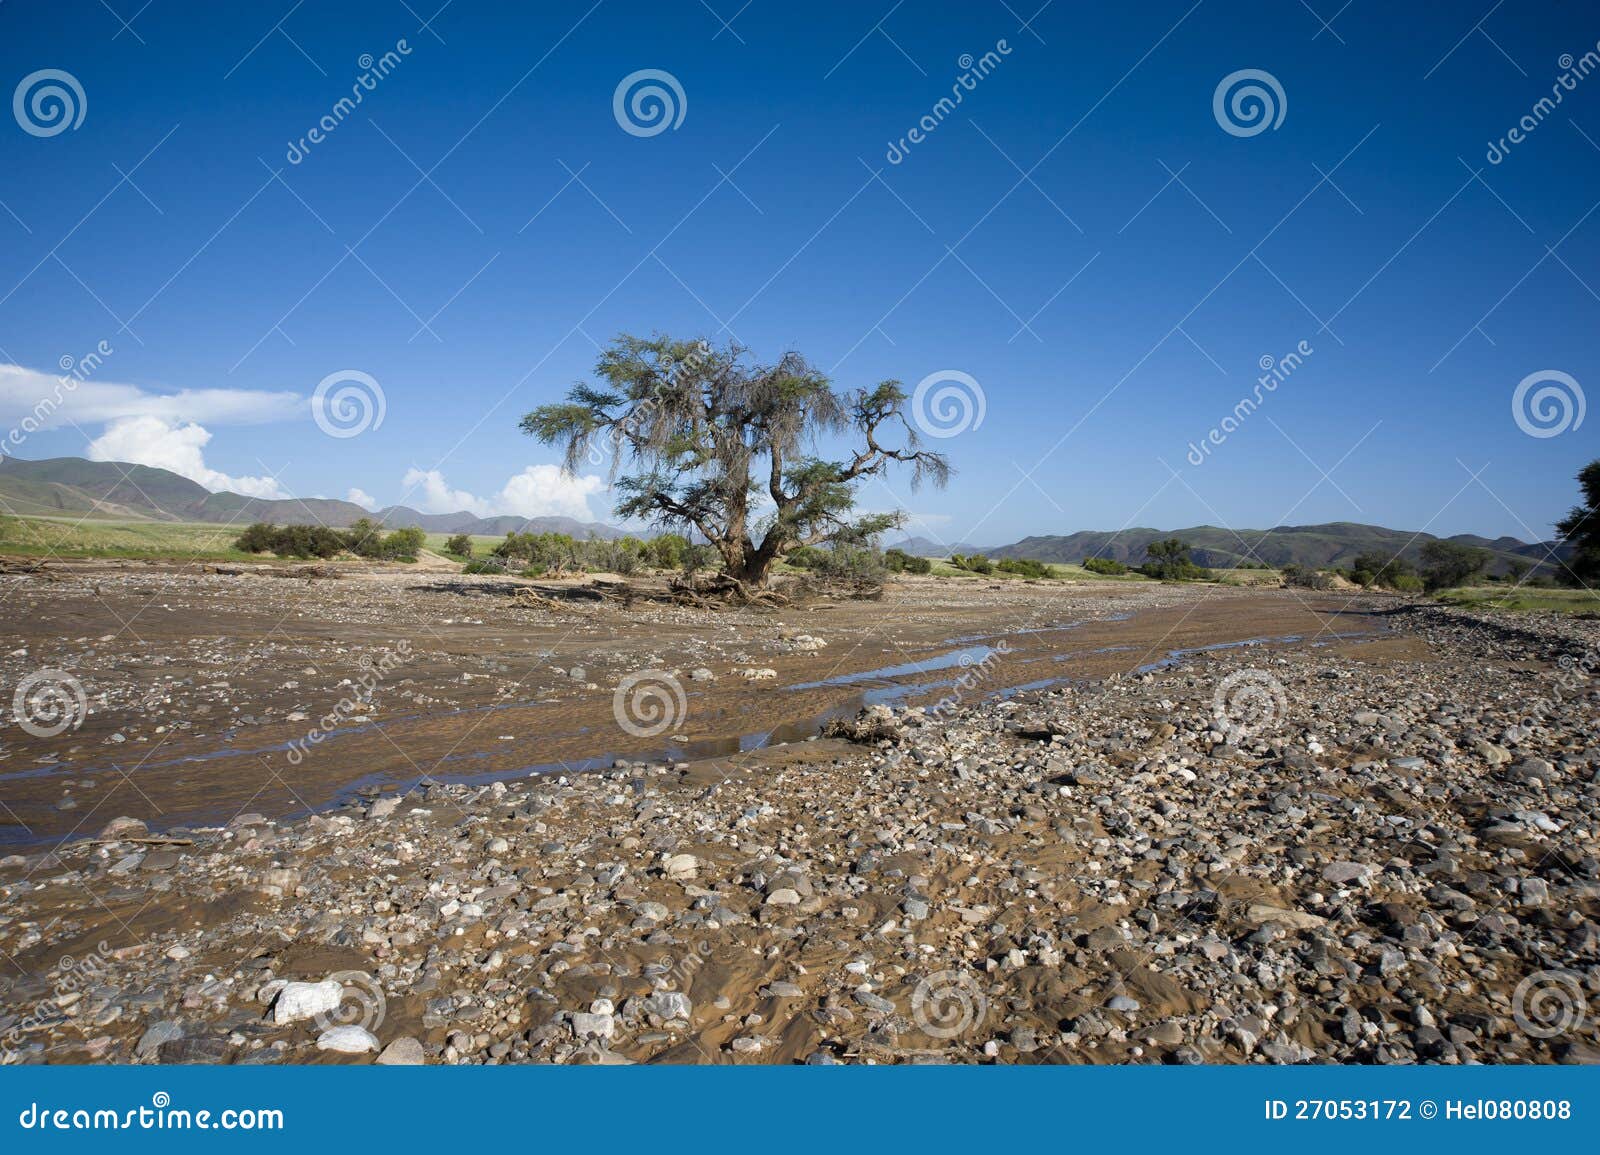 dried river in damaraland, namibia